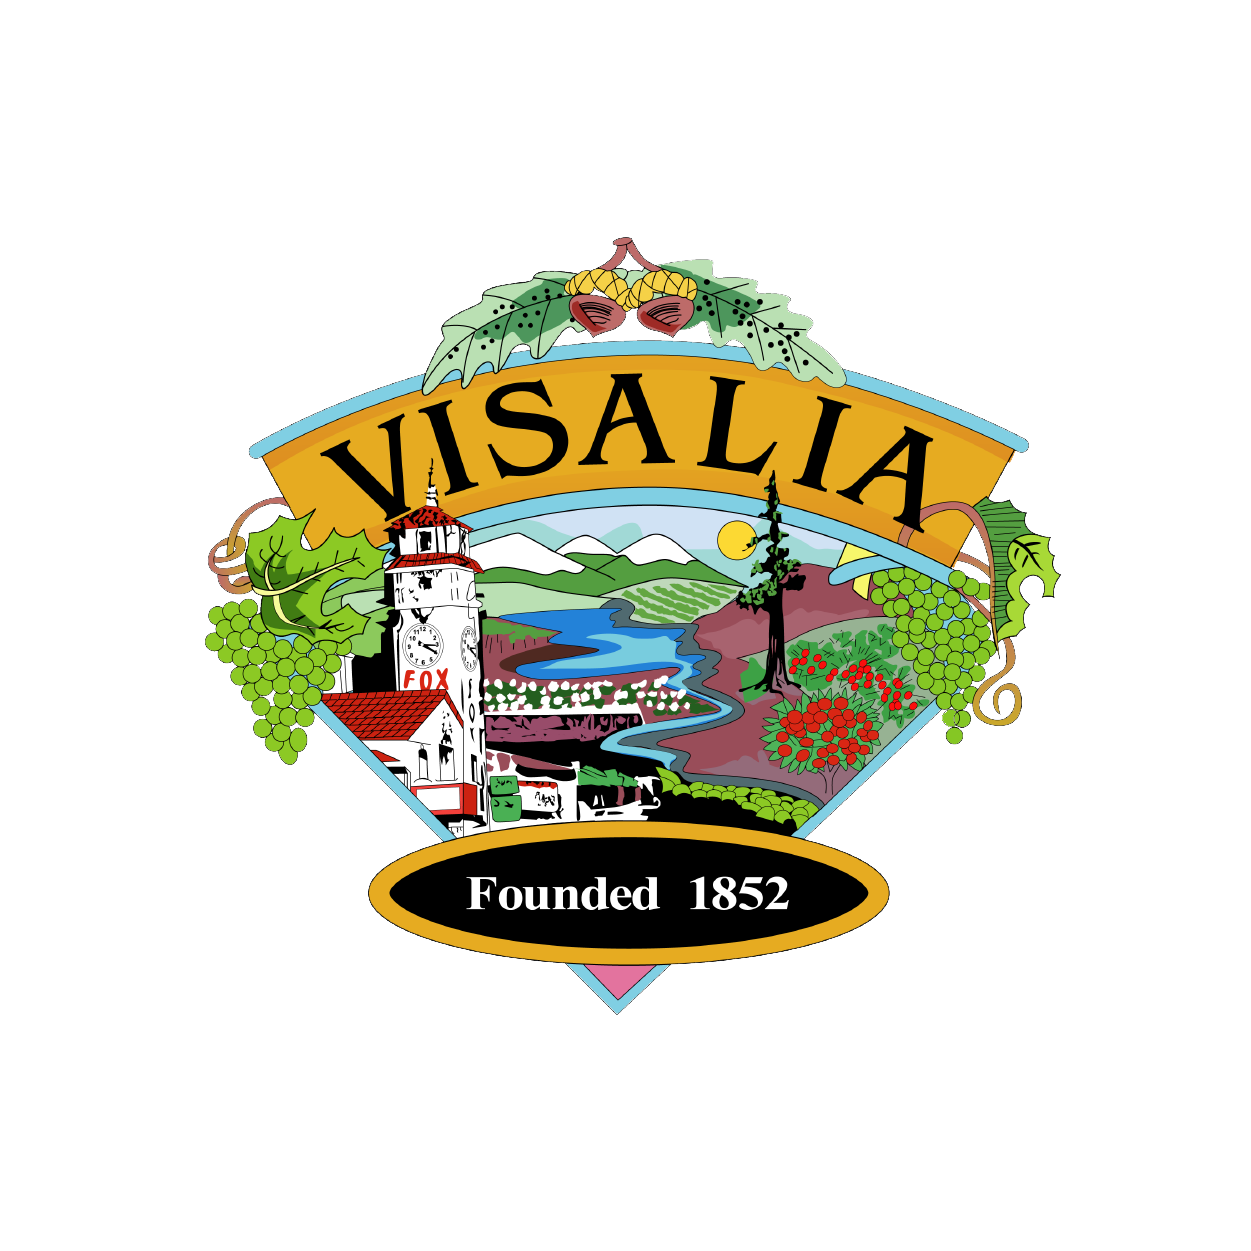 City of Visalia, CA